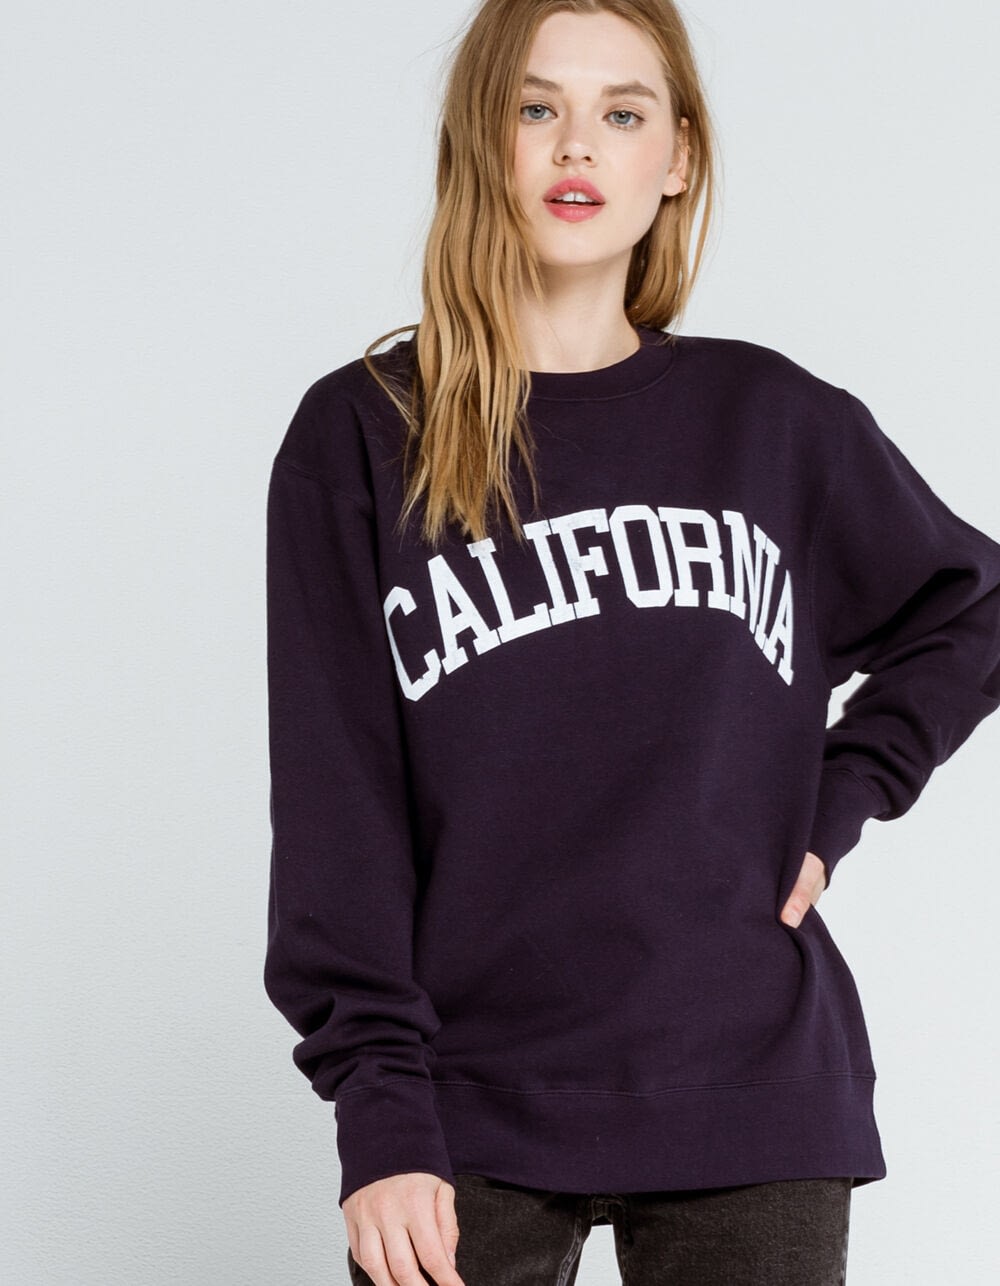 California University Sweatshirt